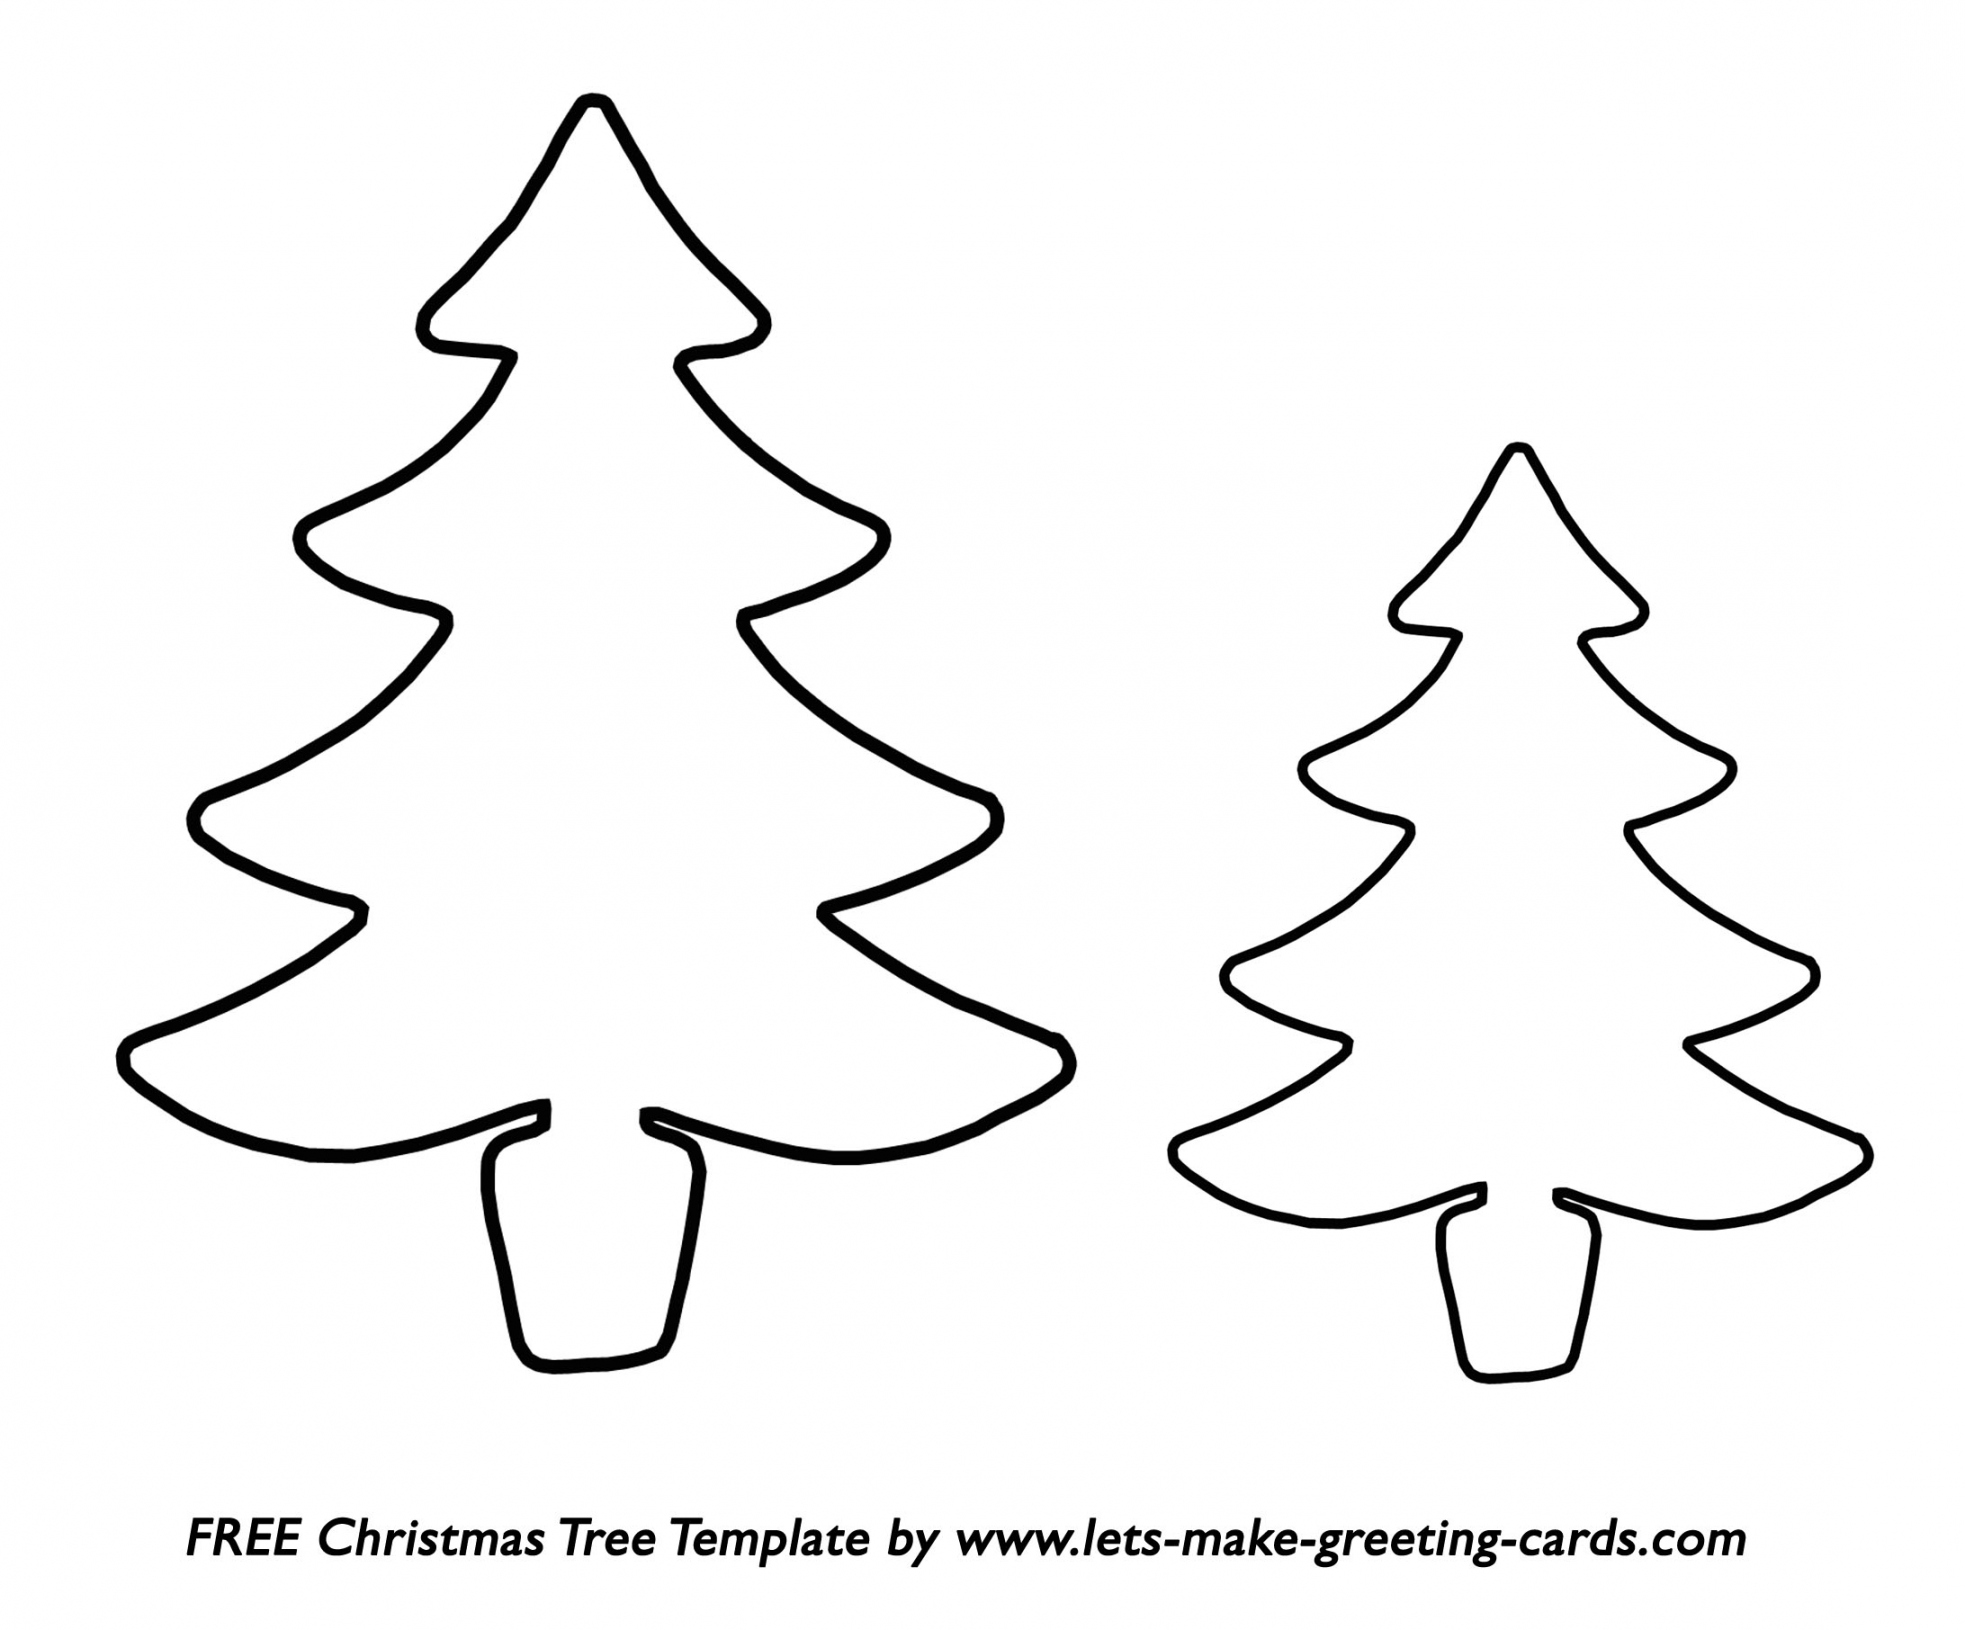 Free Christmas Tree Templates - FREE Printables - Christmas Tree Cutouts